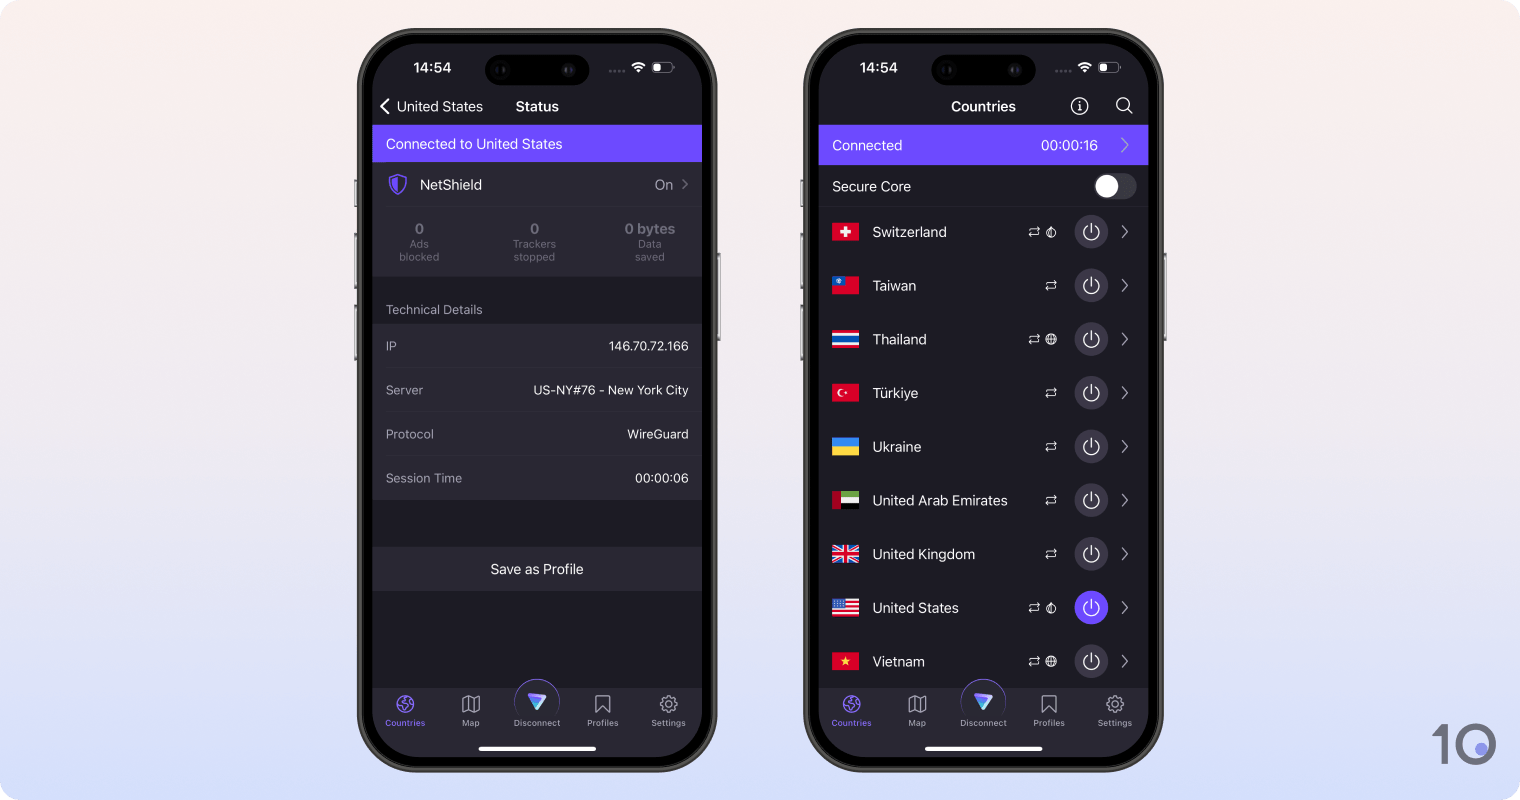 Proton VPN's app for iOS